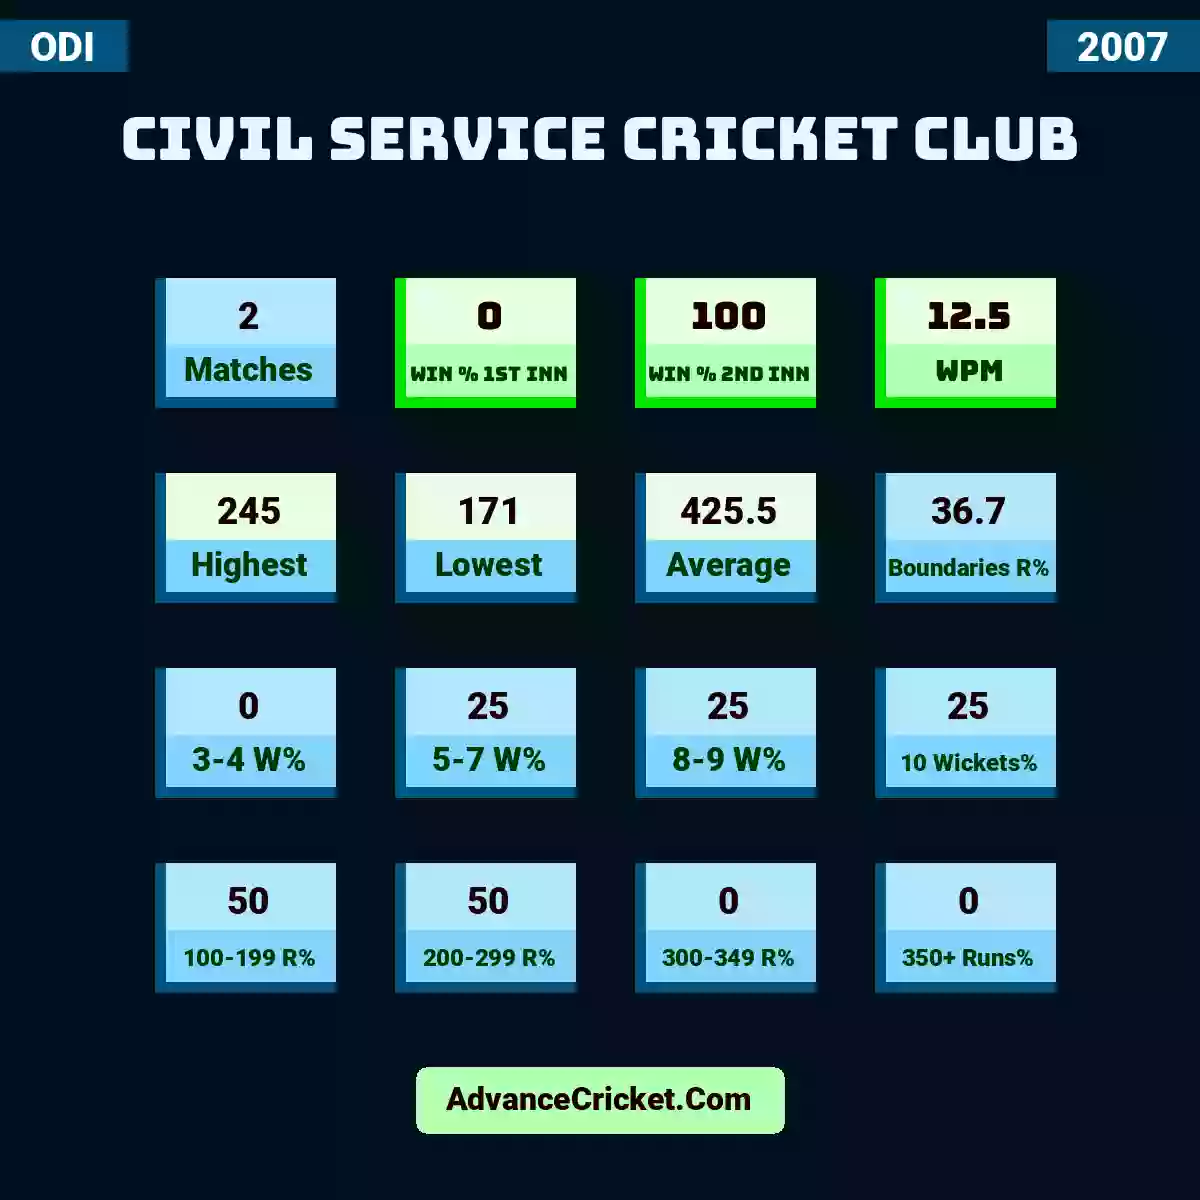 Image showing Civil Service Cricket Club with Matches: 2, Win % 1st Inn: 0, Win % 2nd Inn: 100, WPM: 12.5, Highest: 245, Lowest: 171, Average: 425.5, Boundaries R%: 36.7, 3-4 W%: 0, 5-7 W%: 25, 8-9 W%: 25, 10 Wickets%: 25, 100-199 R%: 50, 200-299 R%: 50, 300-349 R%: 0, 350+ Runs%: 0.